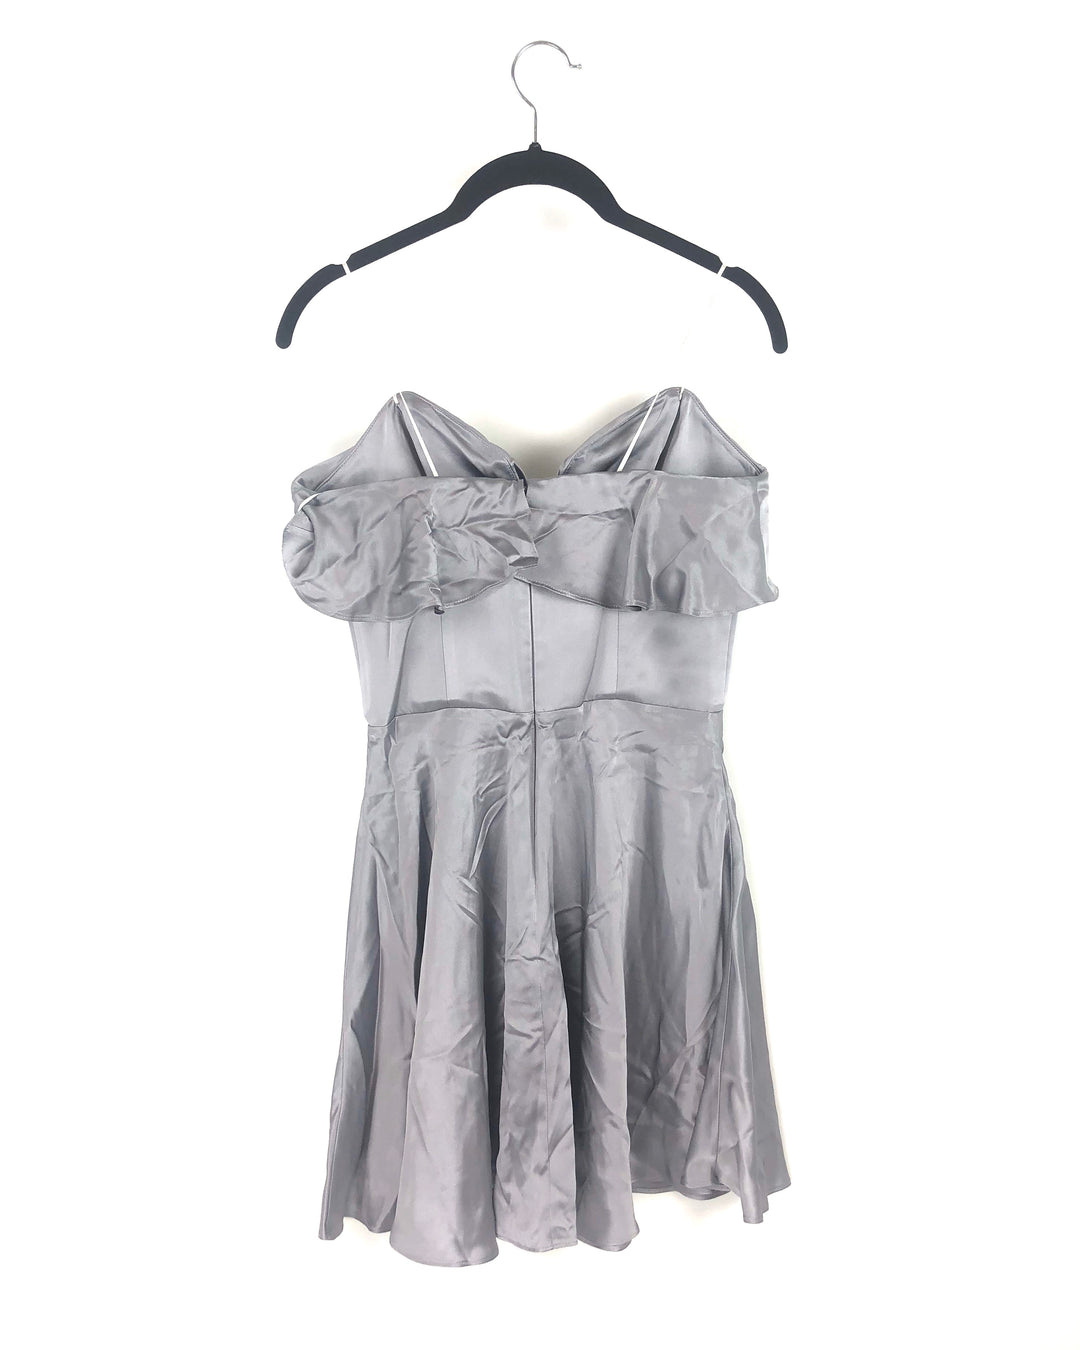 Grey Ruffle Strapless Dress - Small